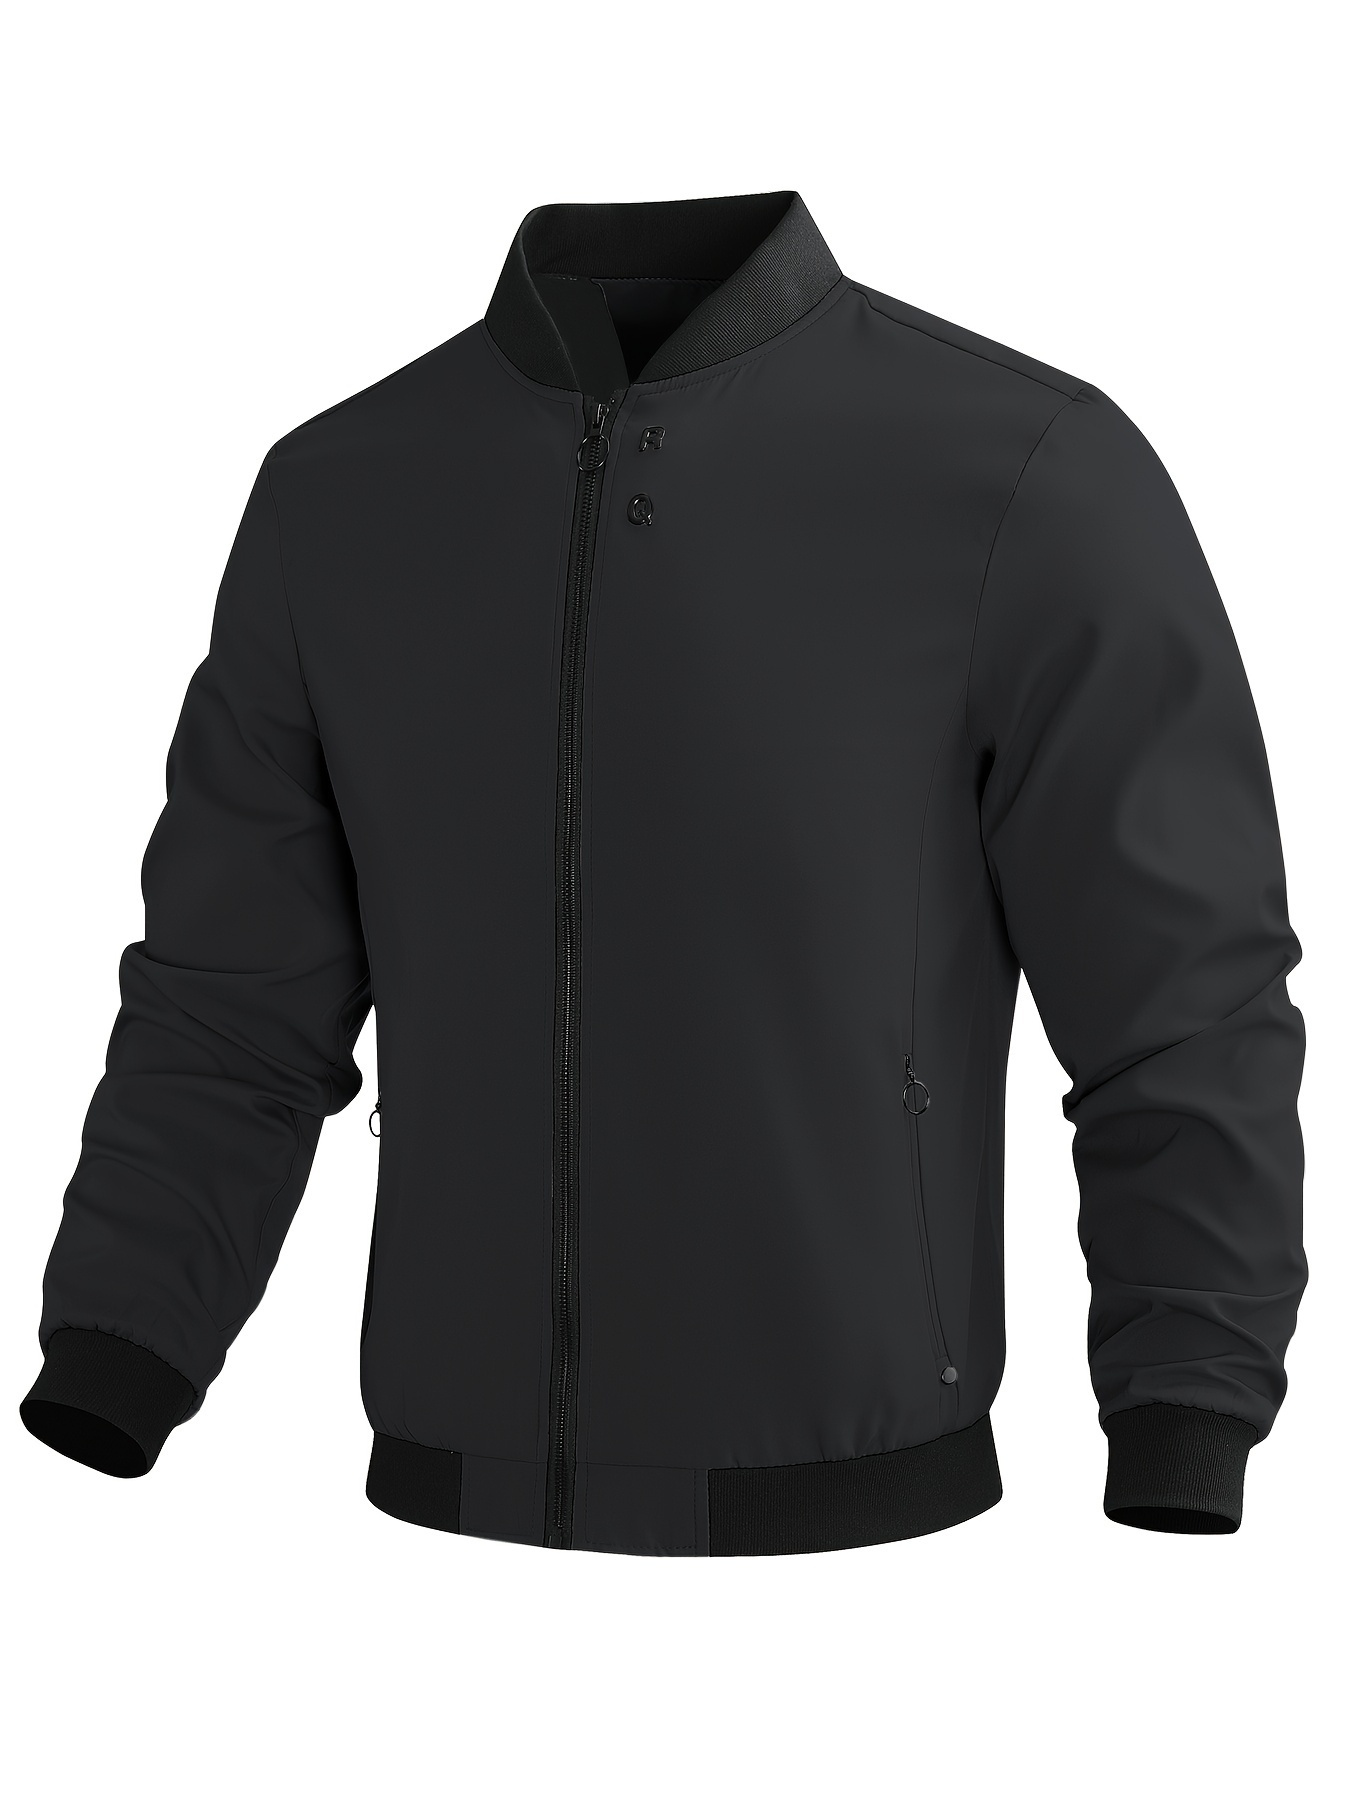 Sudadera con capucha para hombre, chaleco sin mangas con cremallera, diseño  deportivo informal, gran oferta - AliExpress